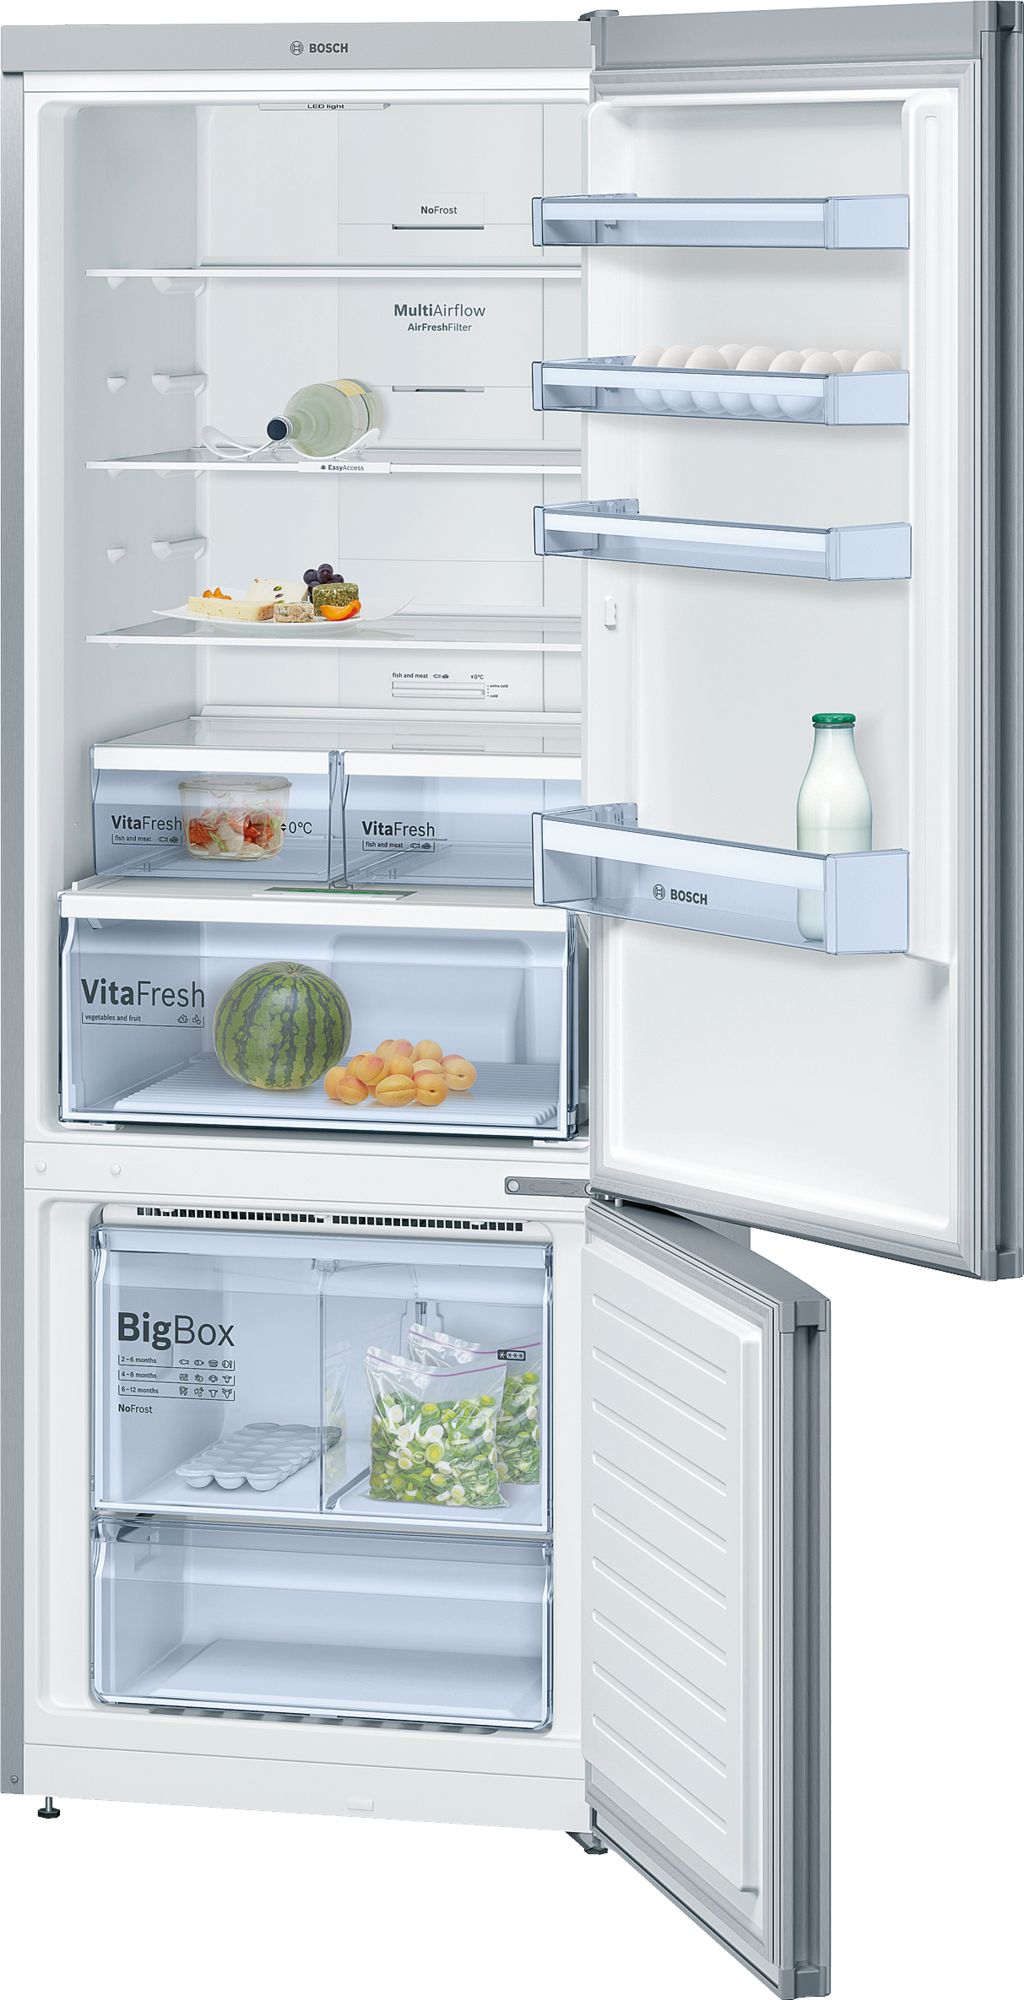 BOSCH : Réfrigérateur combiné Bosch 560L Série 4 inox inoxydable